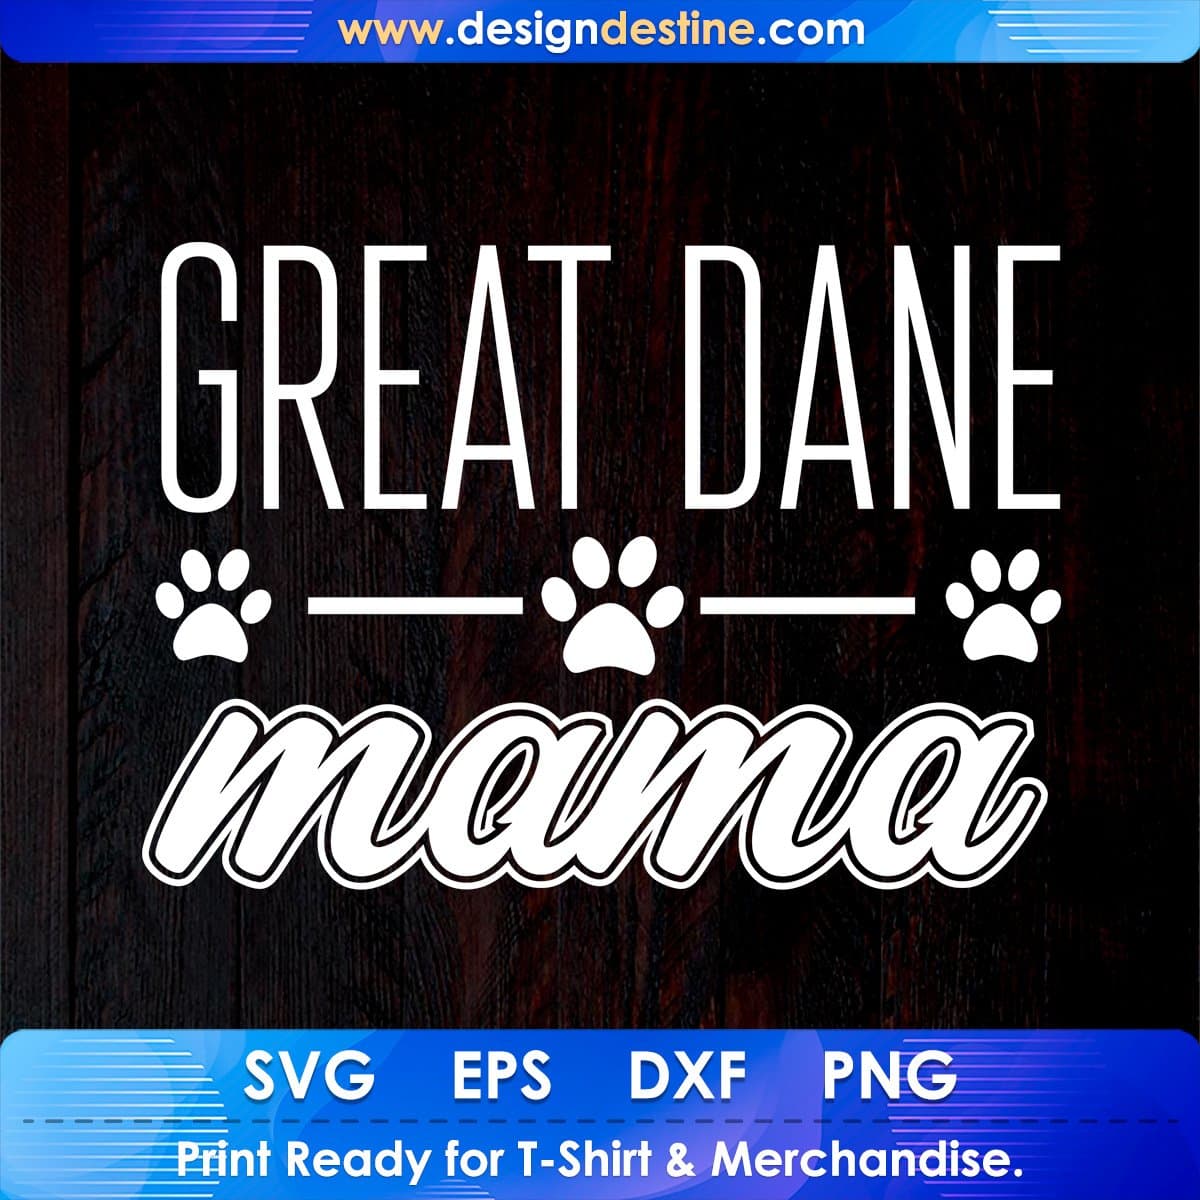 Grate Dane Mama T shirt Design In Svg Png Cutting Printable Files